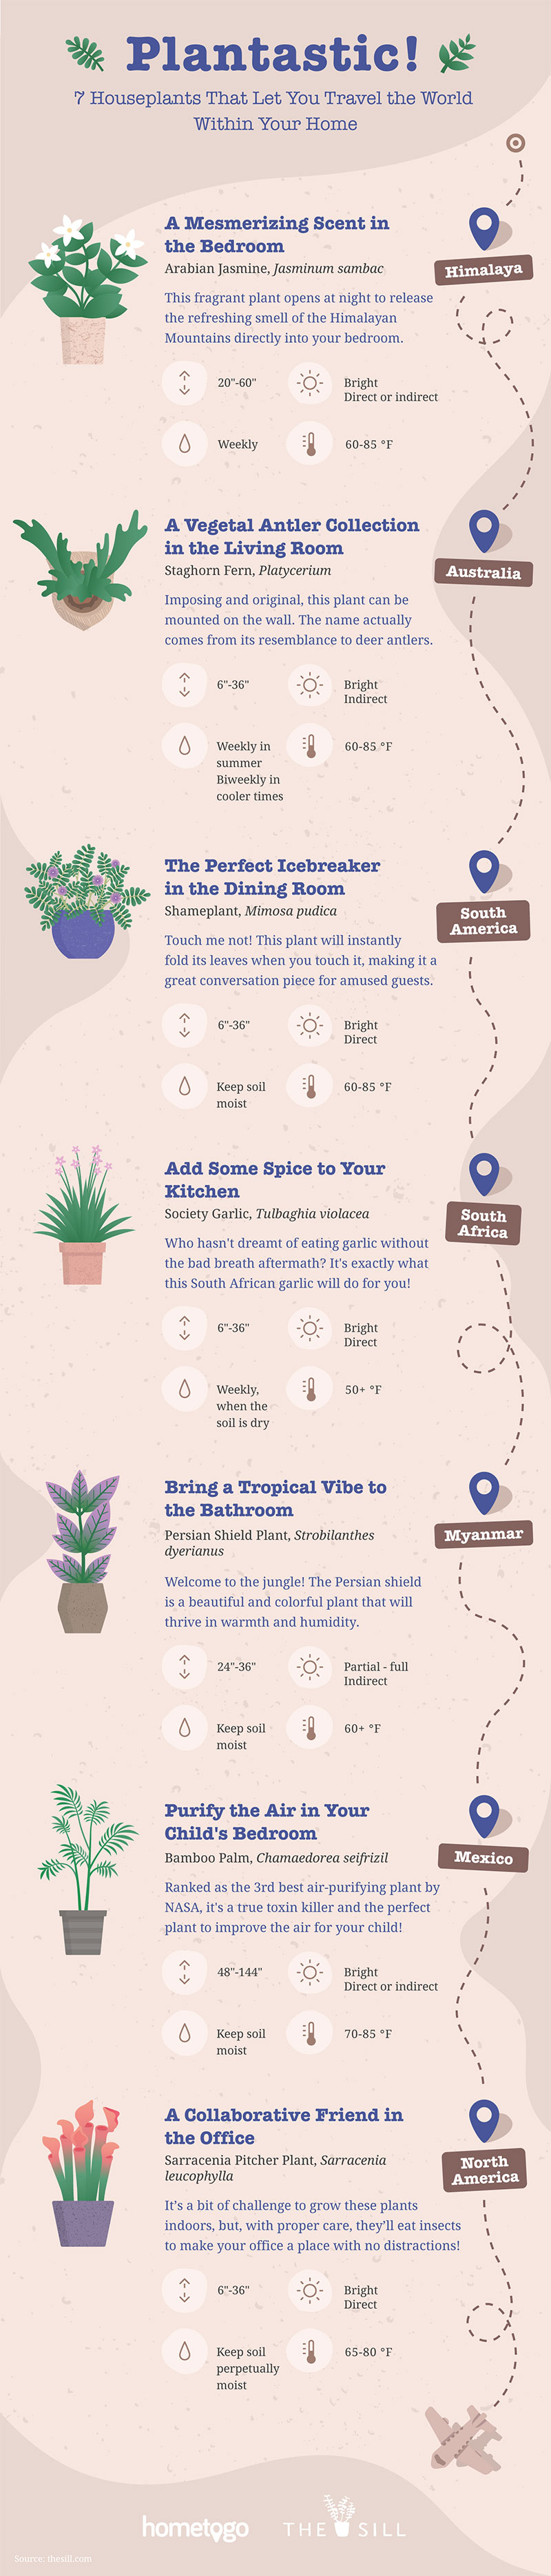 houseplants infographic